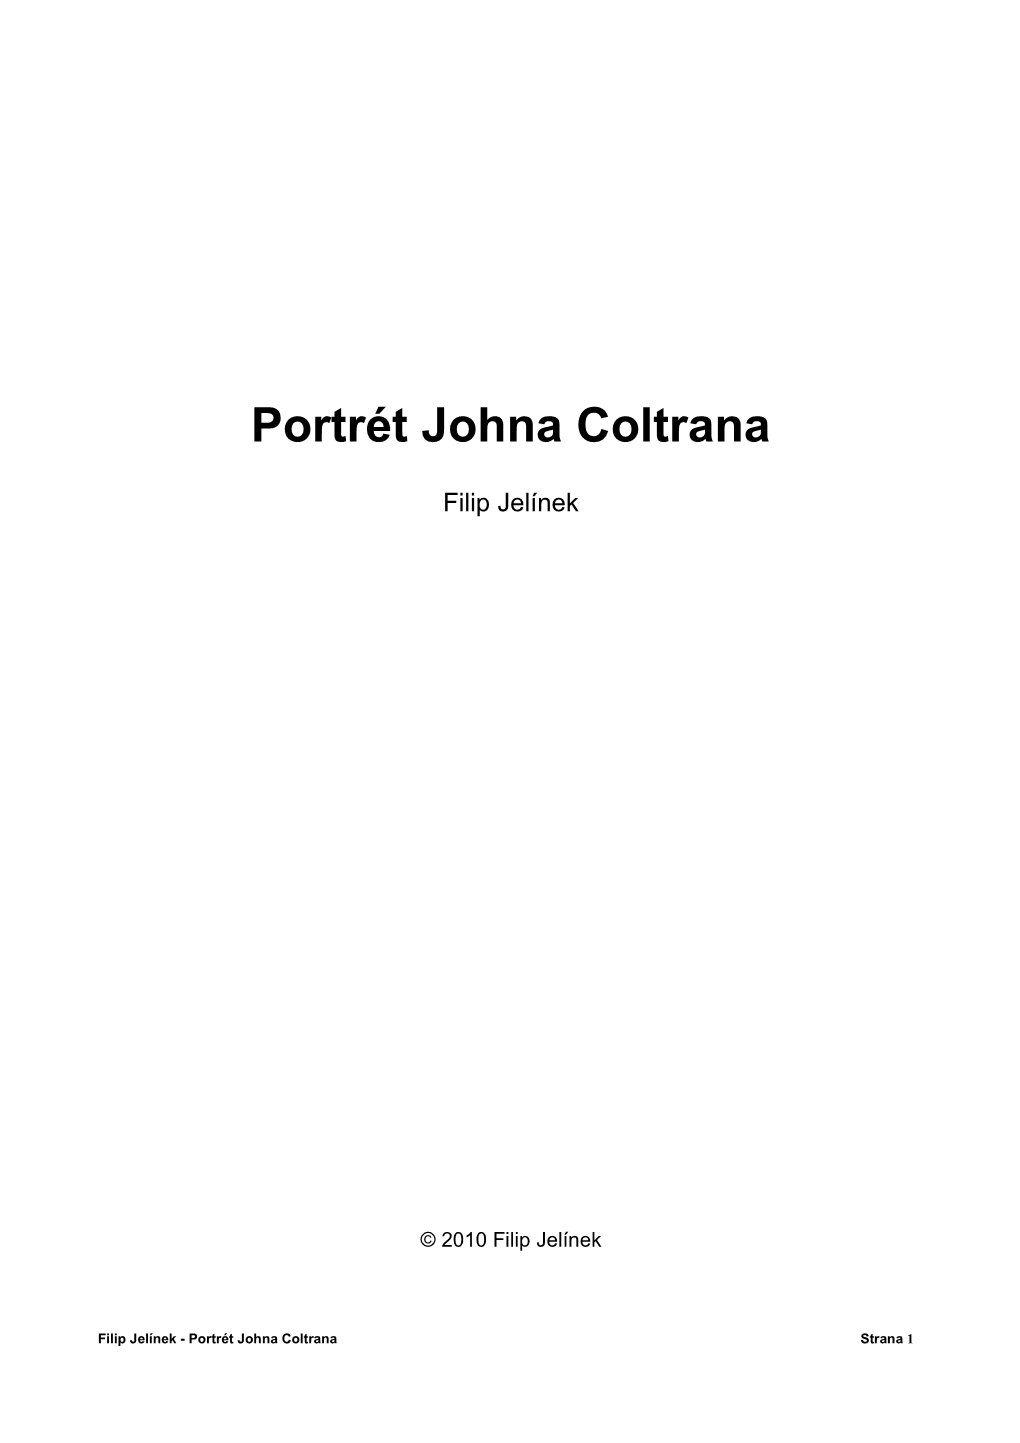 Portrét Johna Coltrana